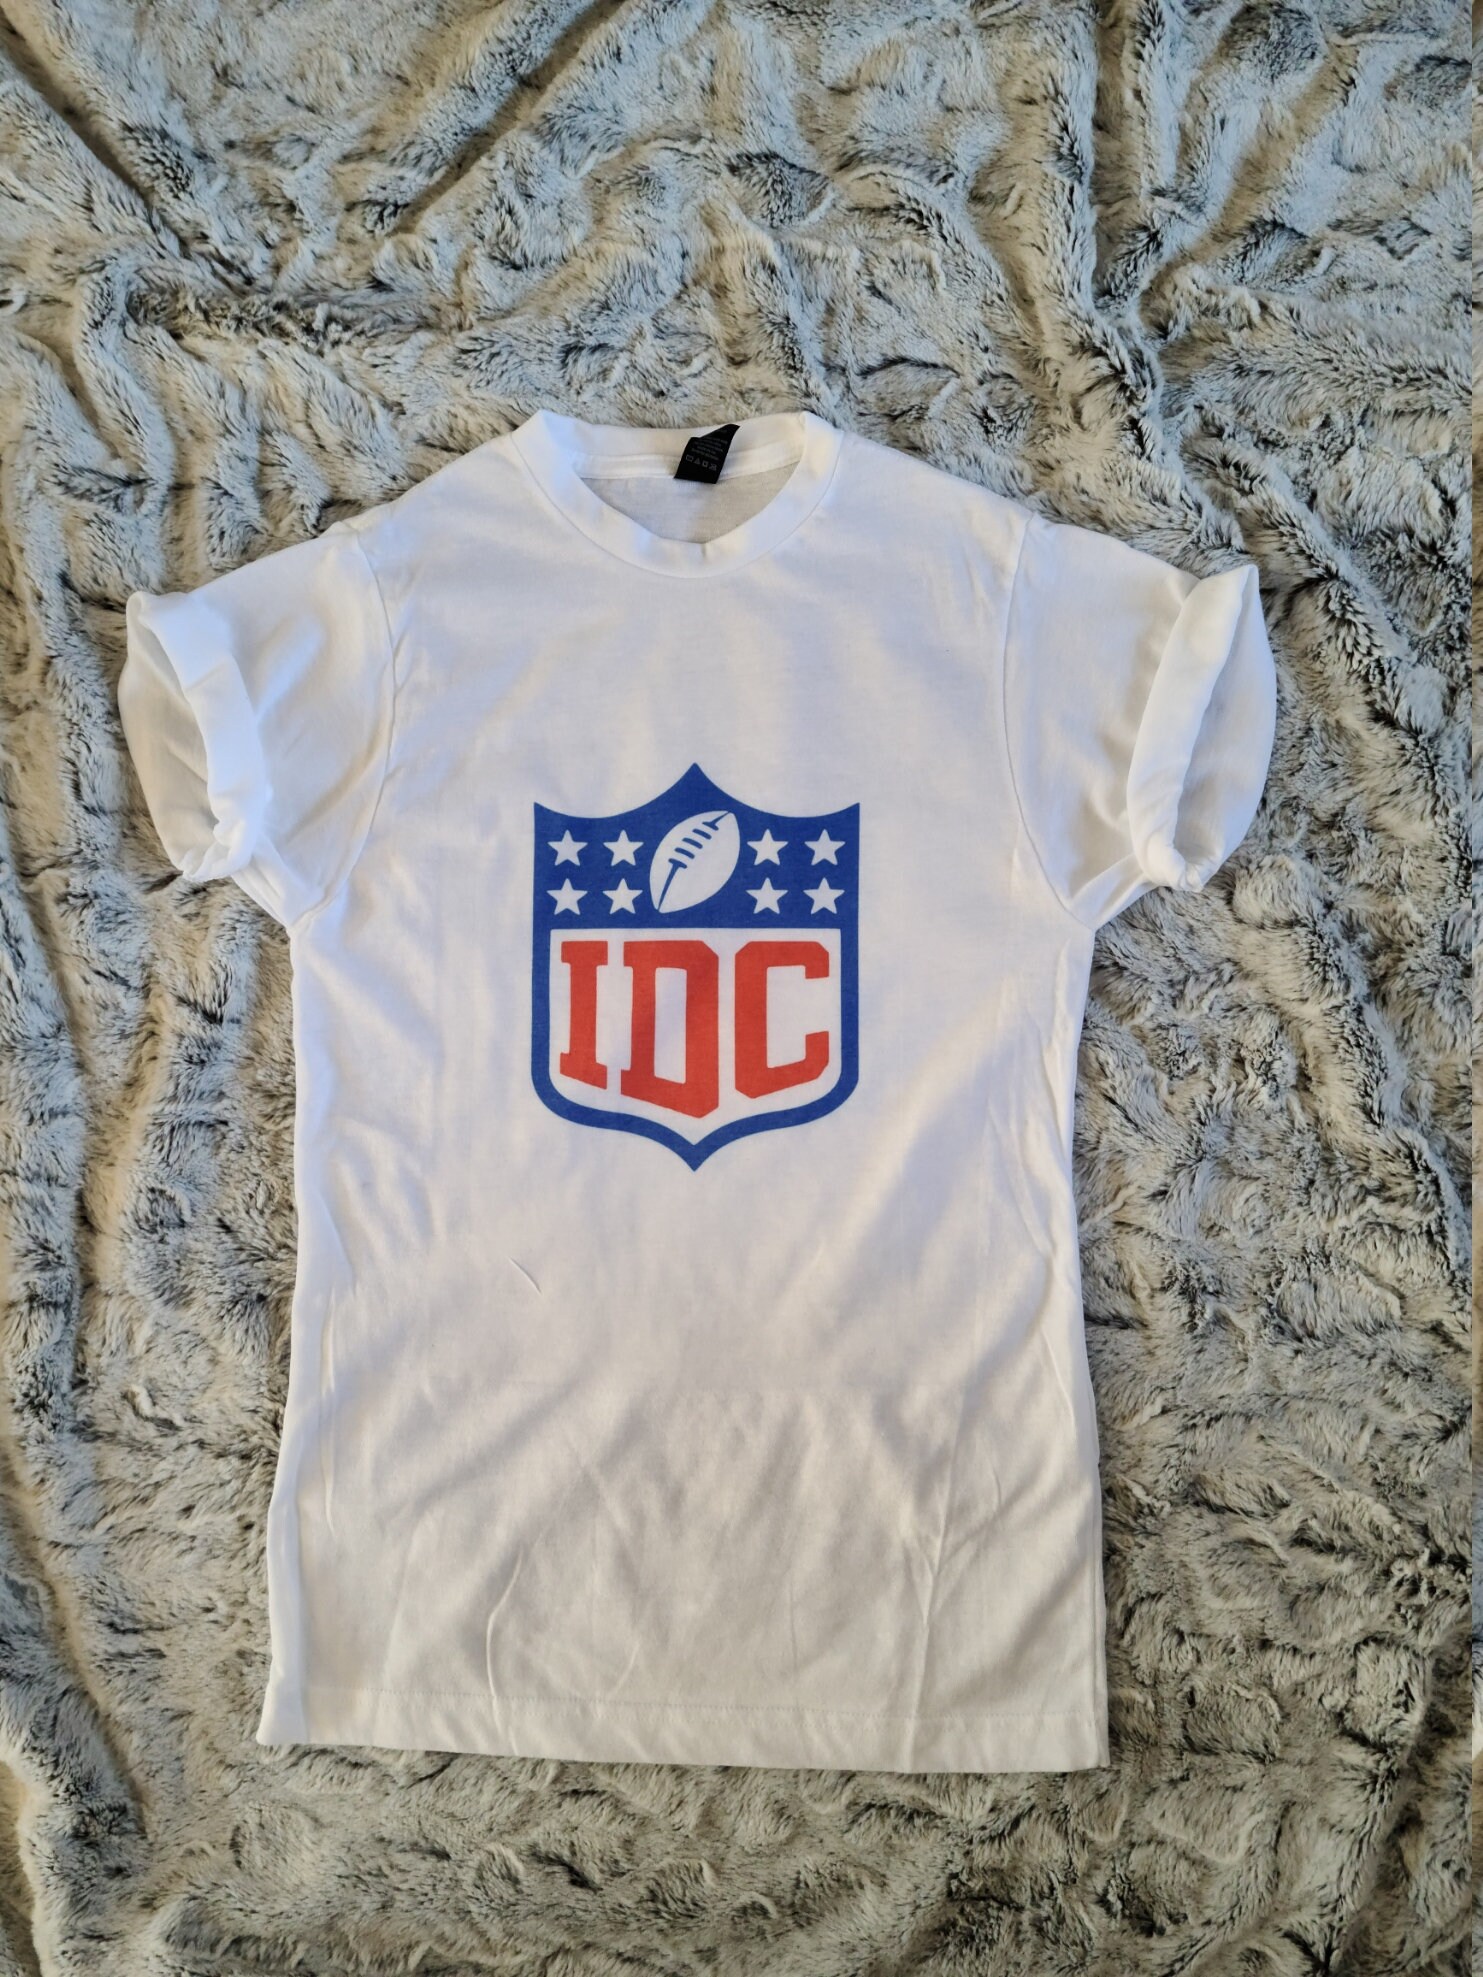 Football IDC Shirt | Etsy